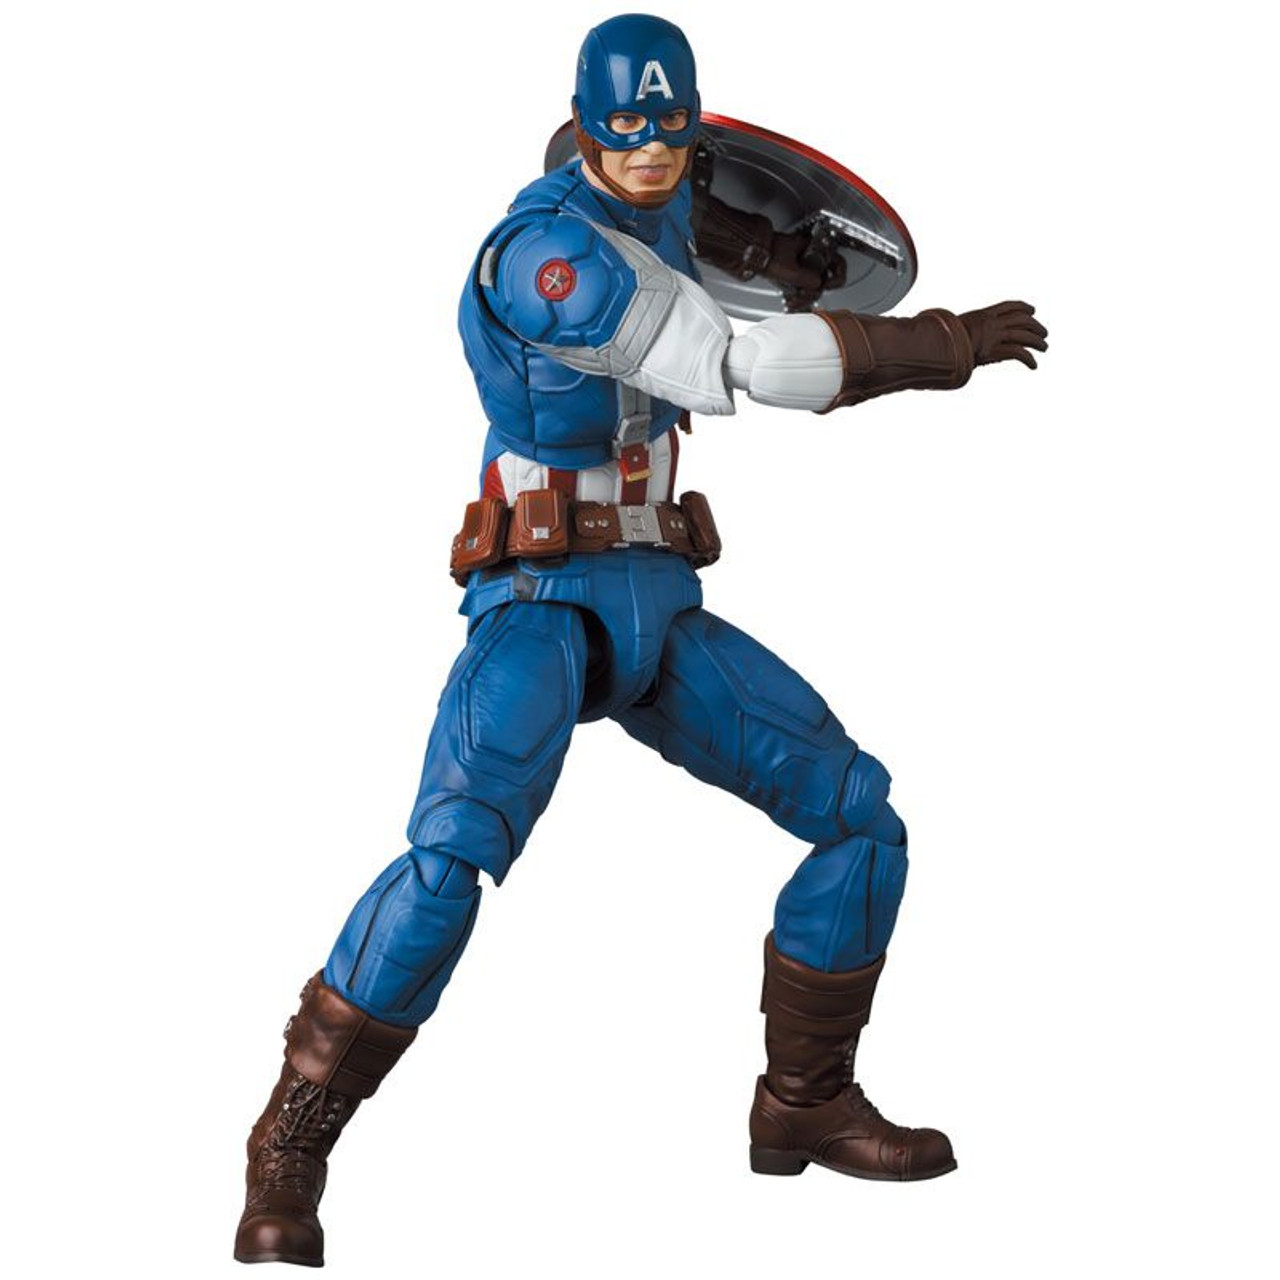 MAFEX No.220 Captain America - Classic Suit Ver. Figure